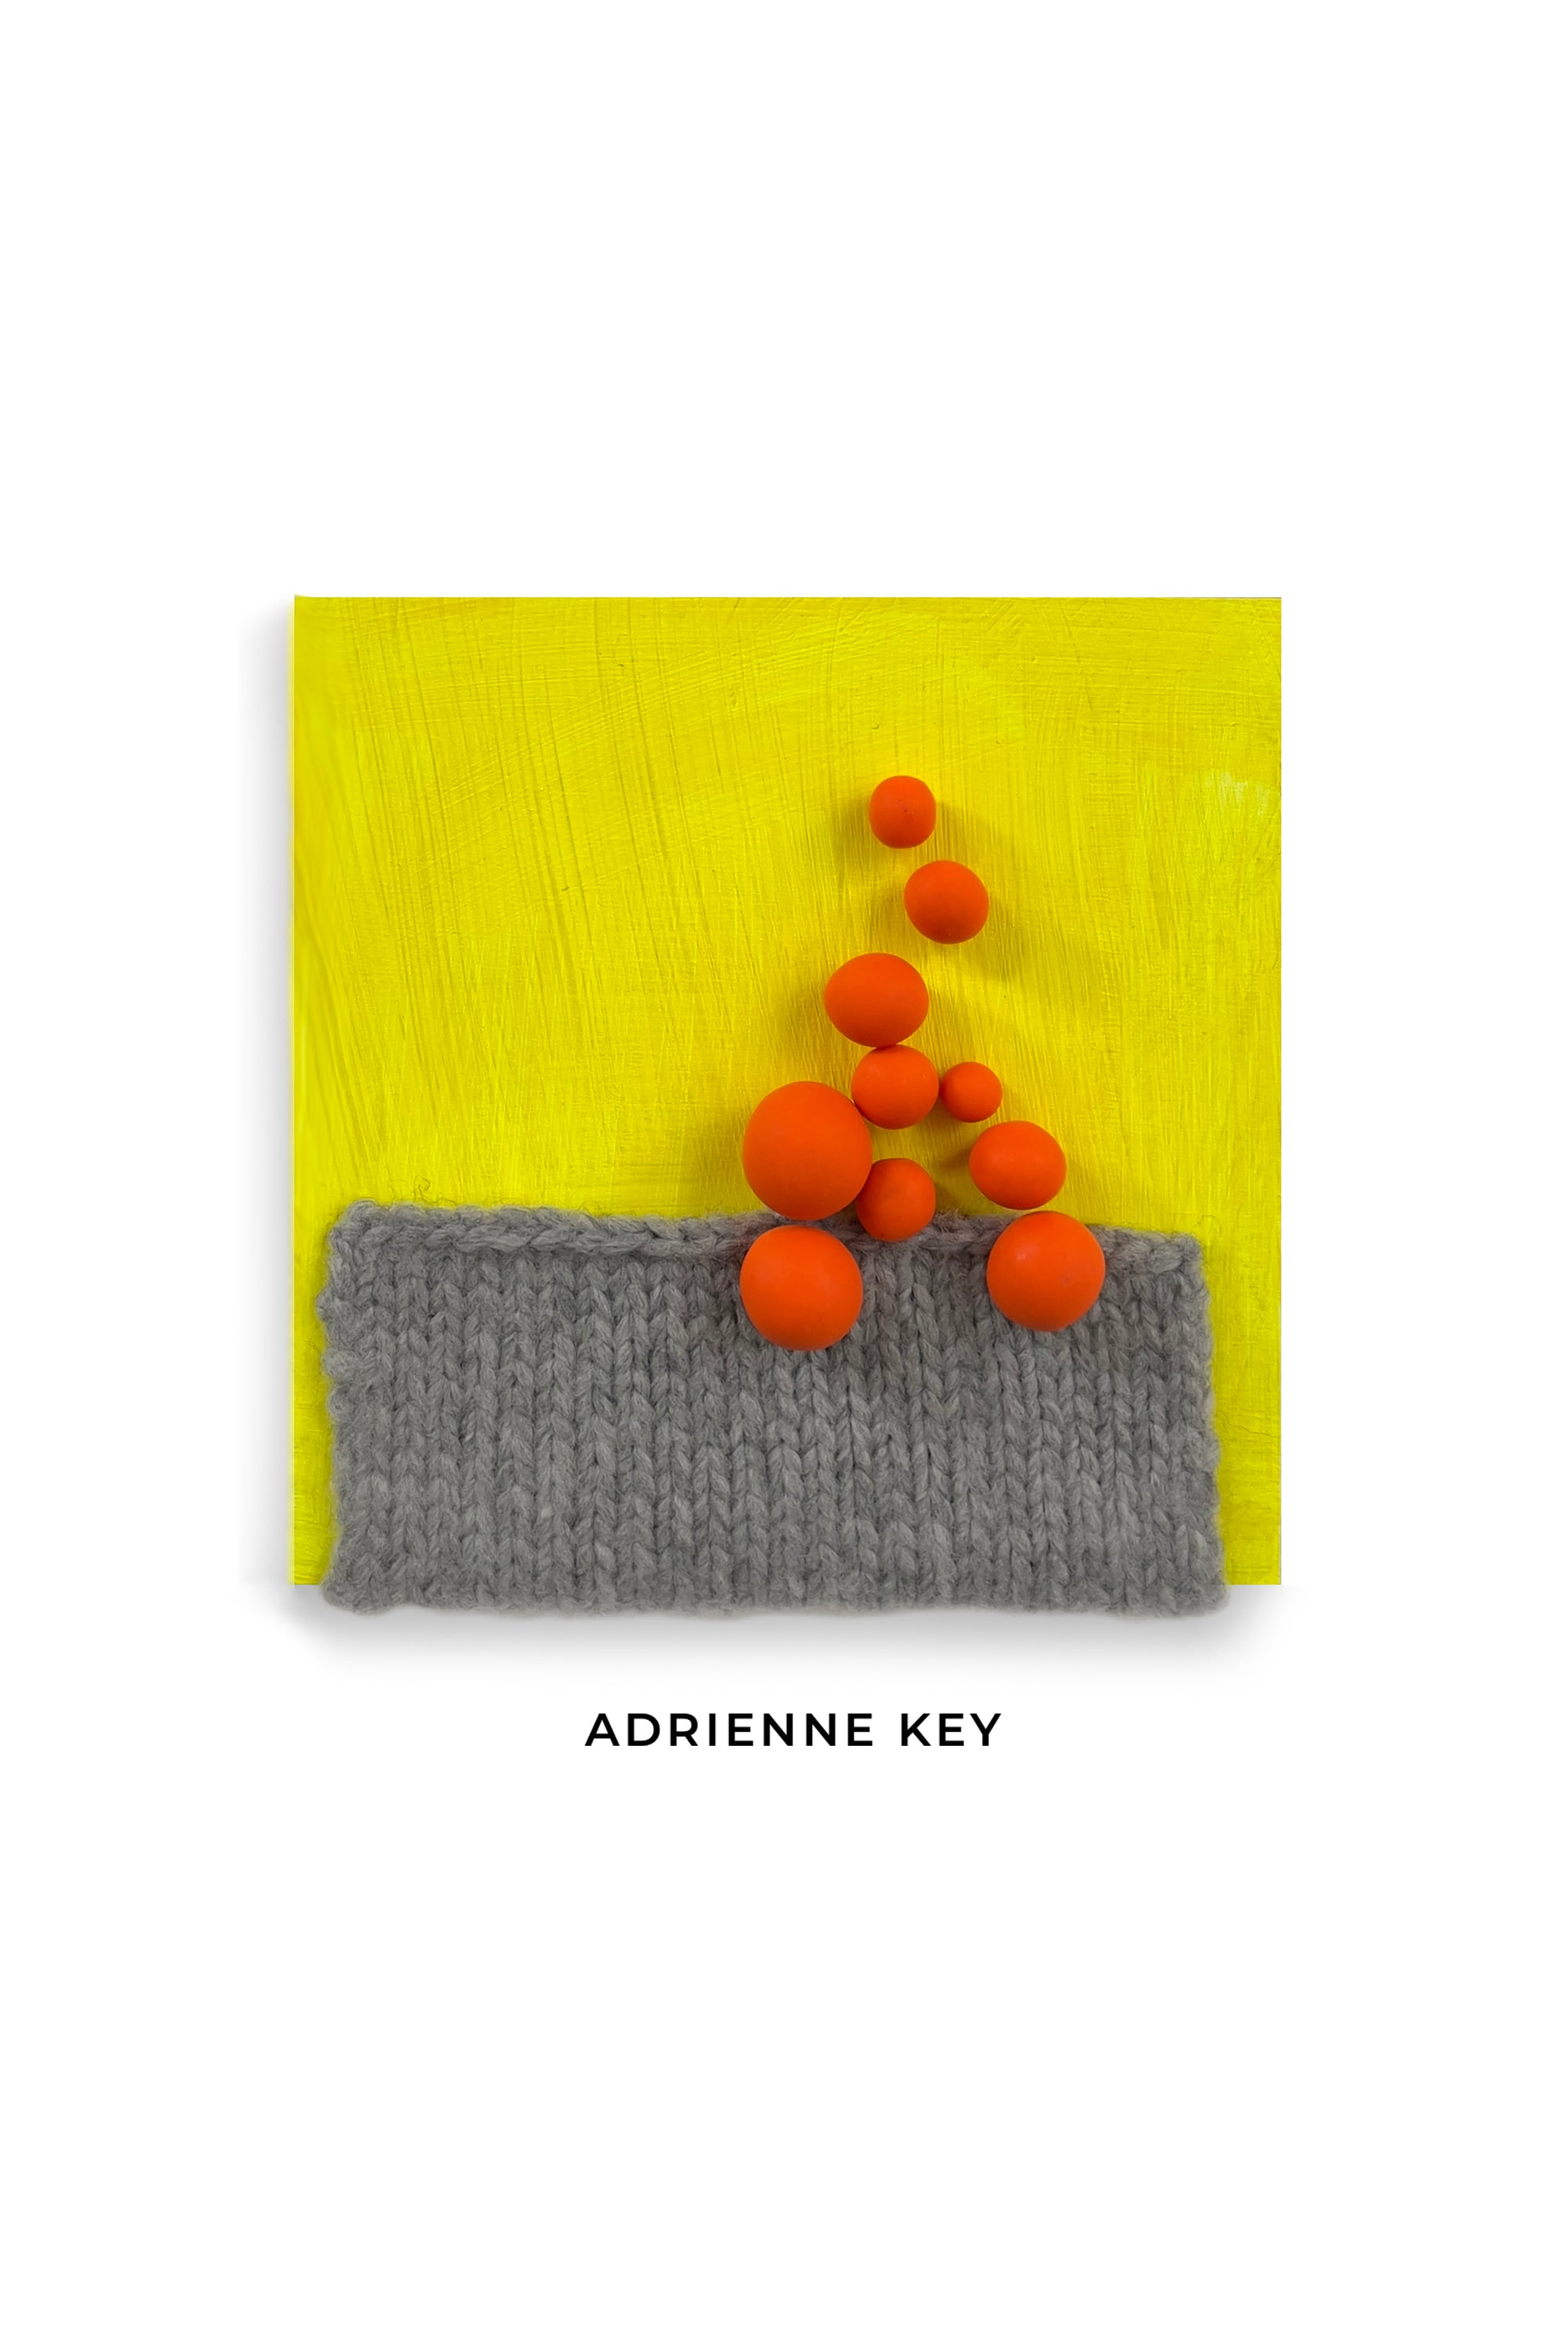 Original 4x4 inch mixed media art on a bright yellow wood base, knit grey wool, and orange polymer clay balls